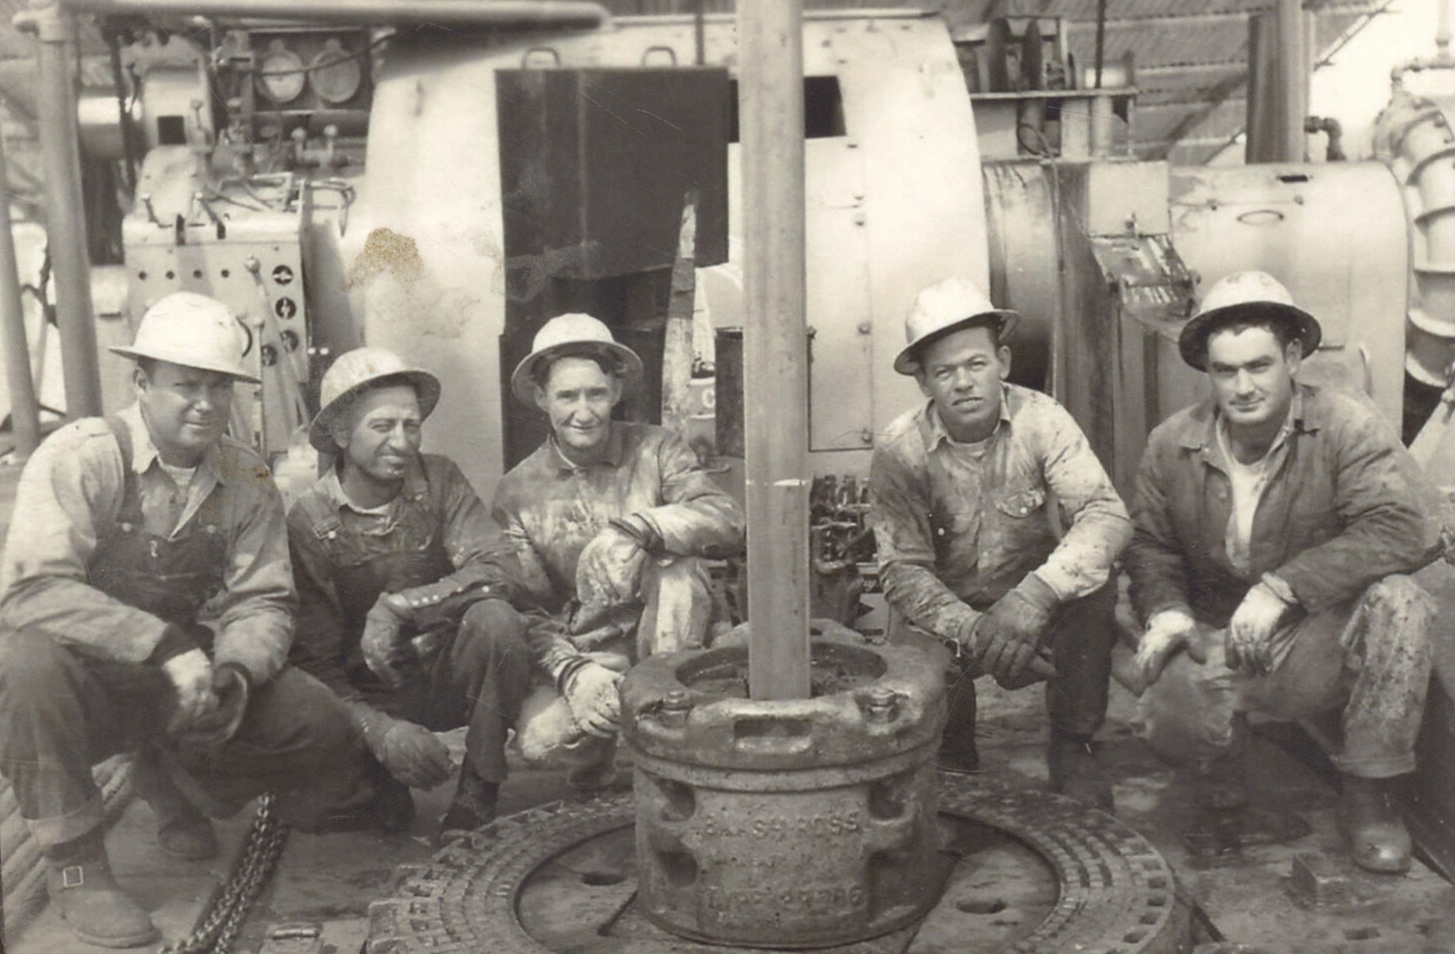 1940s Oil Workers in Andrews Texas